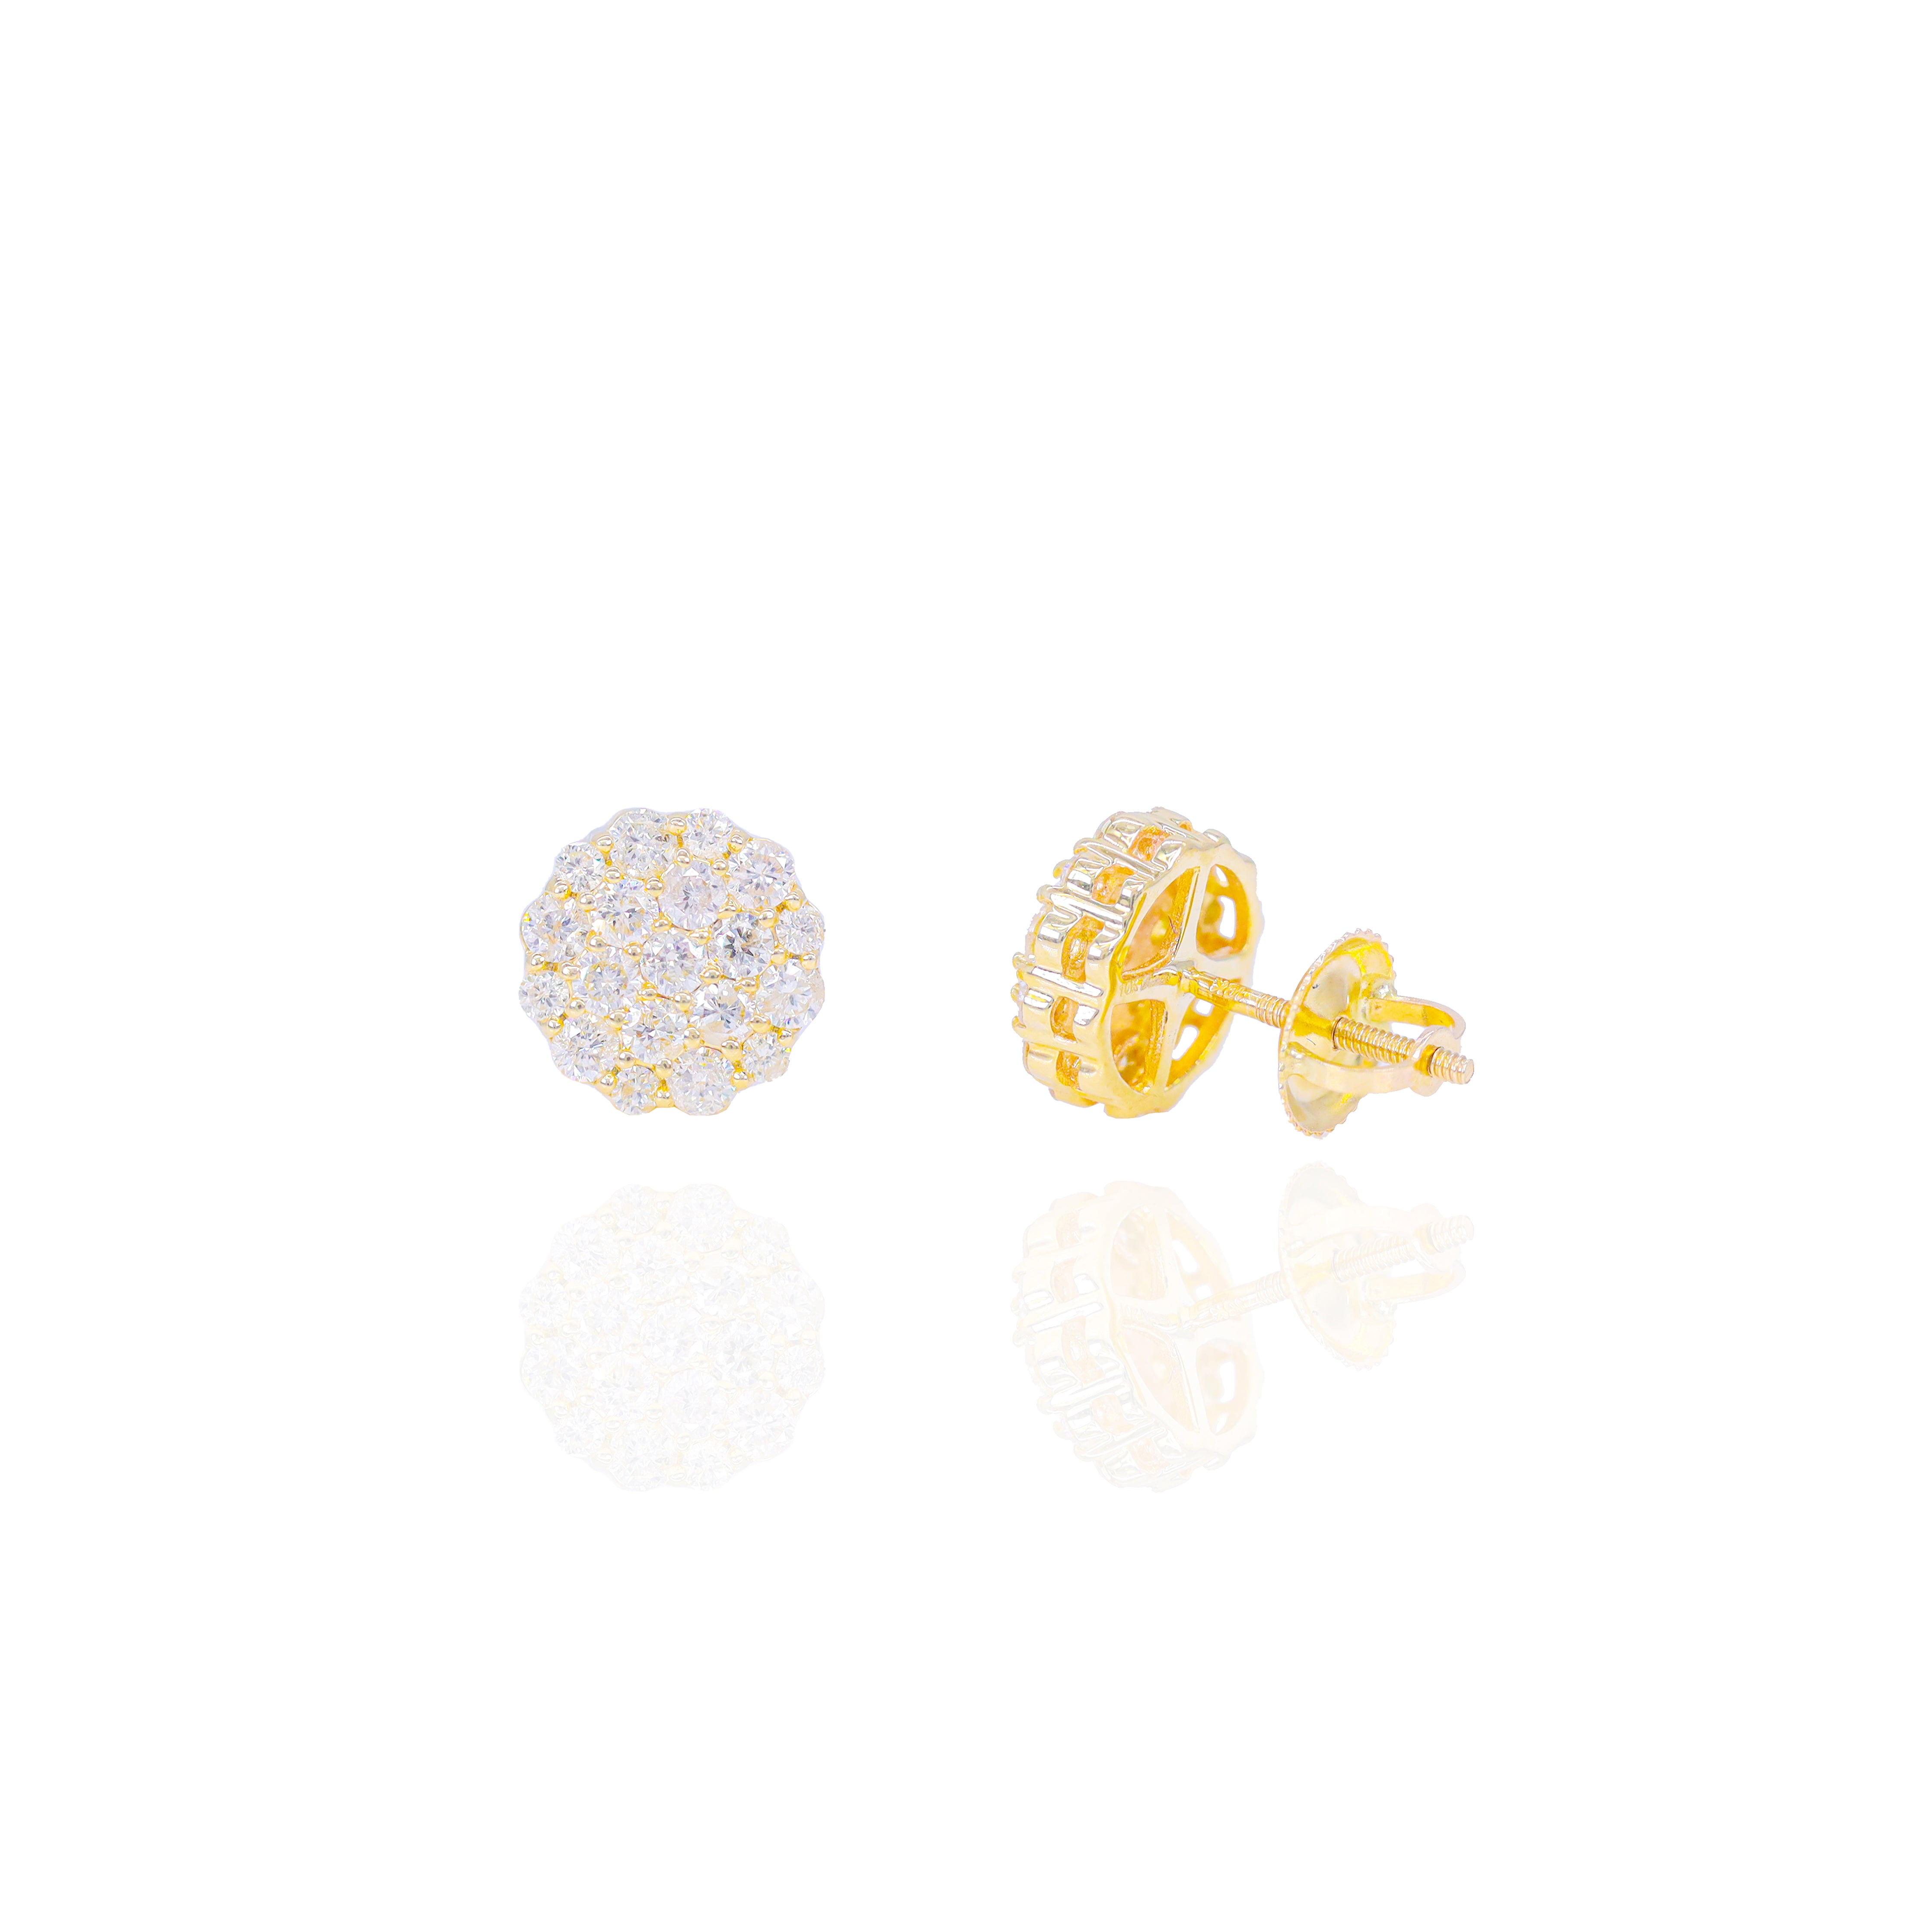 Bubbly Style Diamond Cluster Earrings